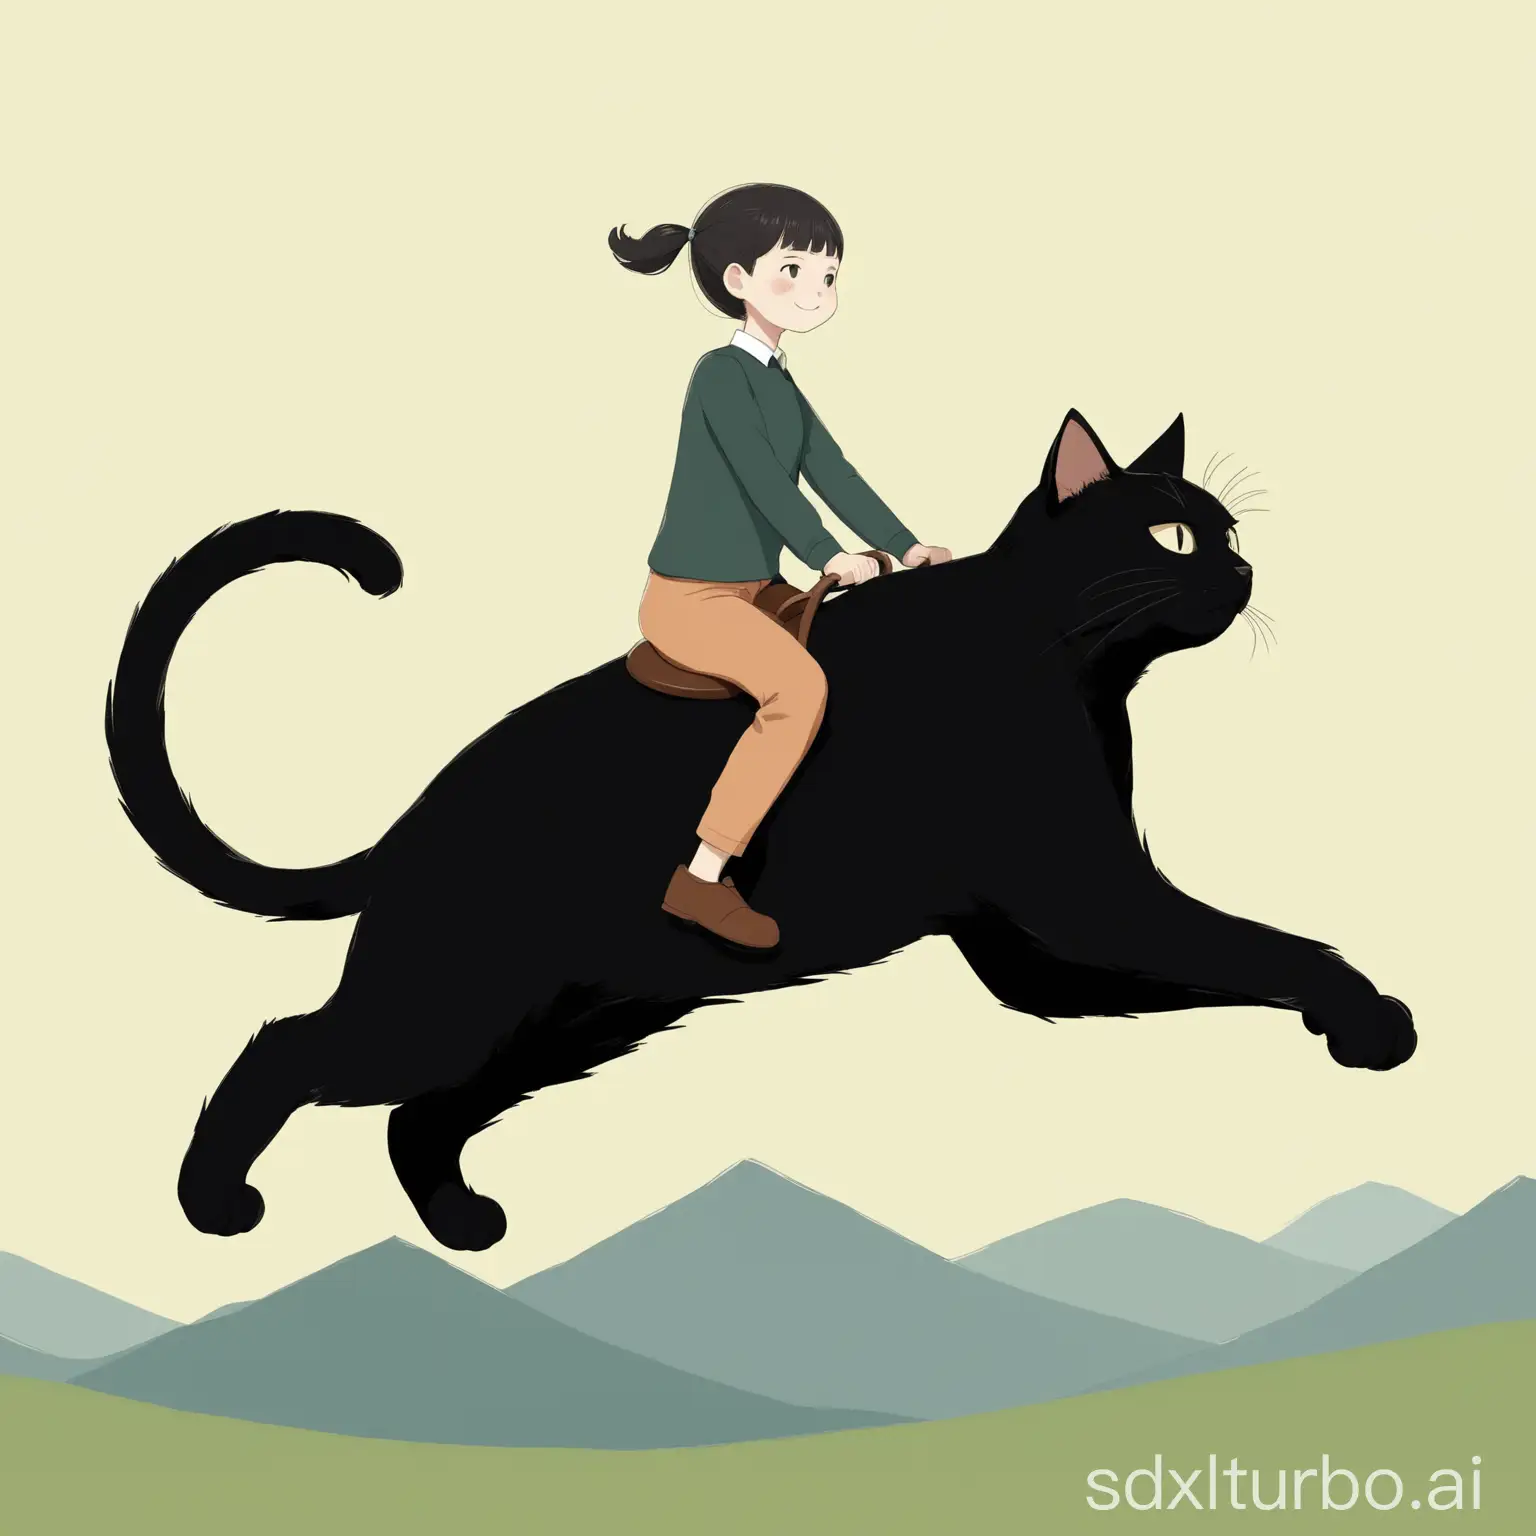 Human riding big black cat